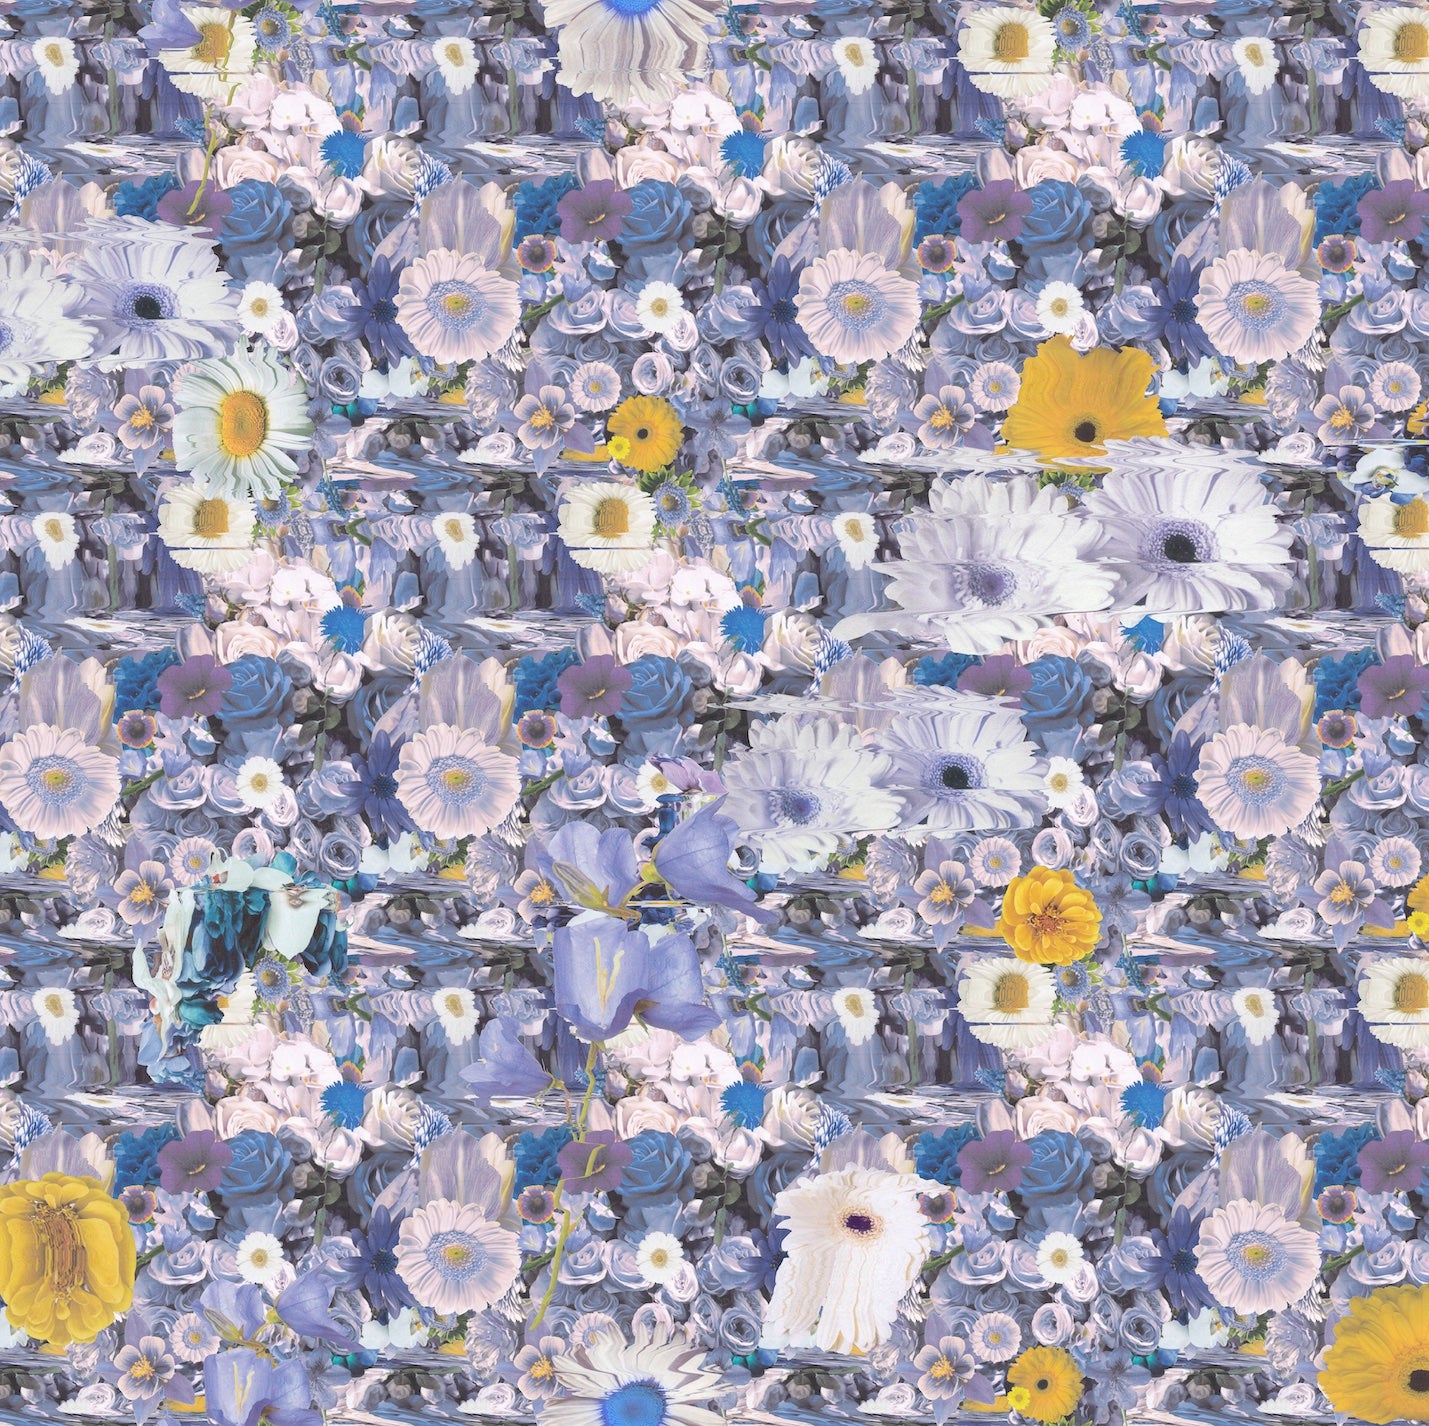 Blue Flower Trip Wallpaper